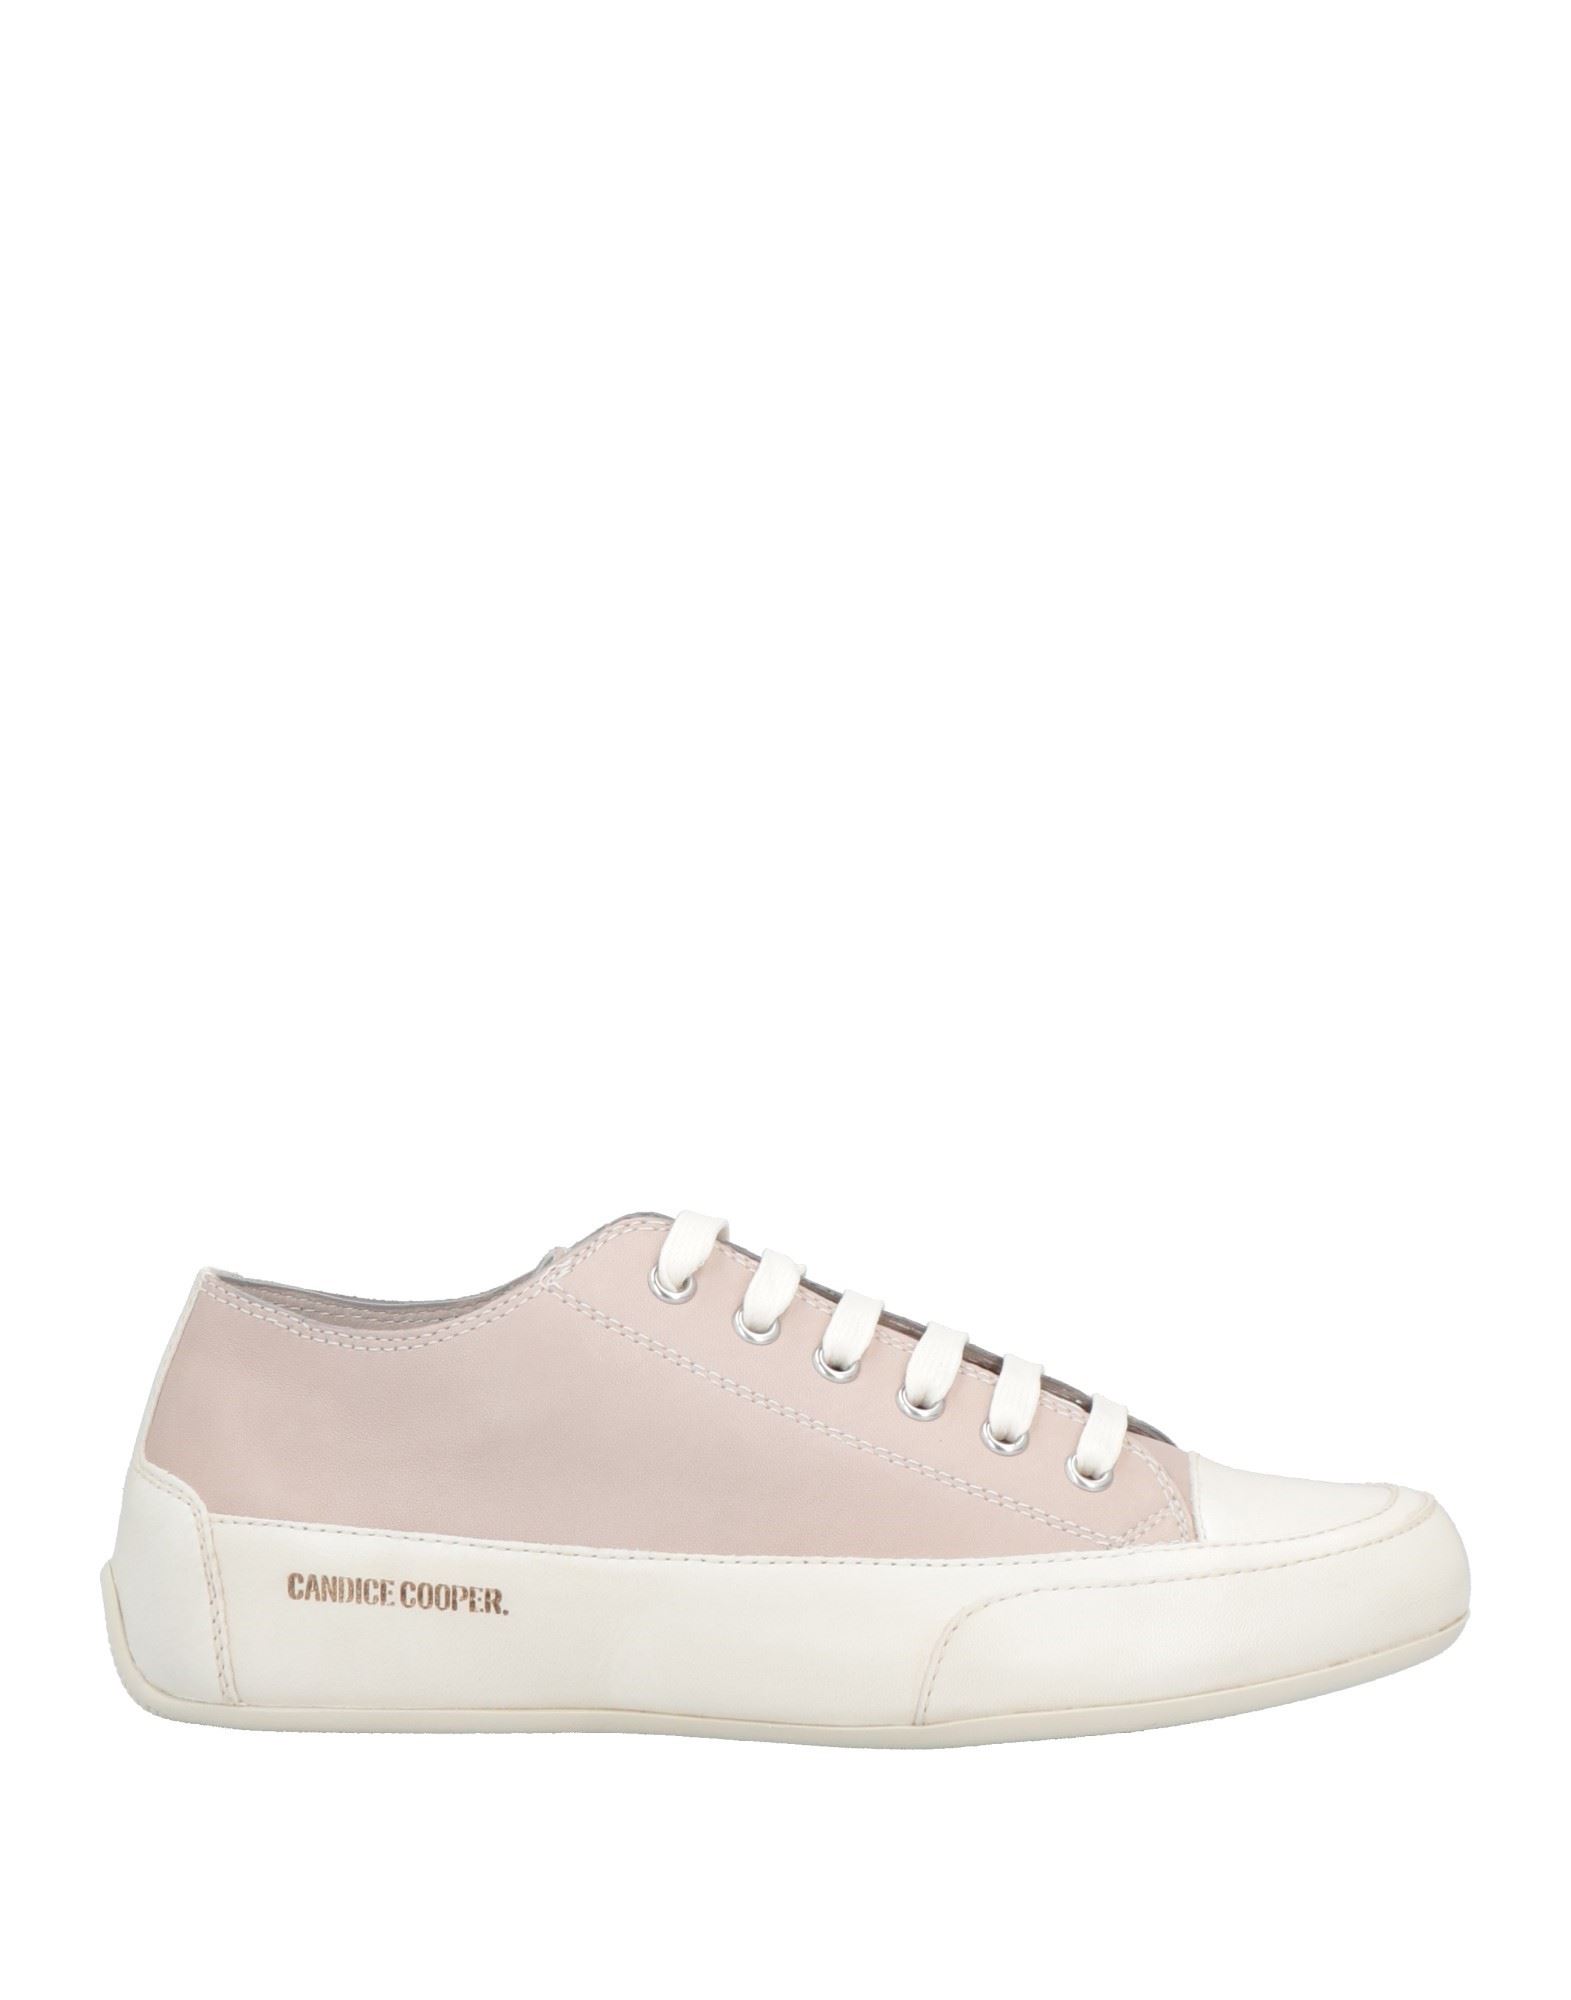 Candice Cooper Sneakers In Grey